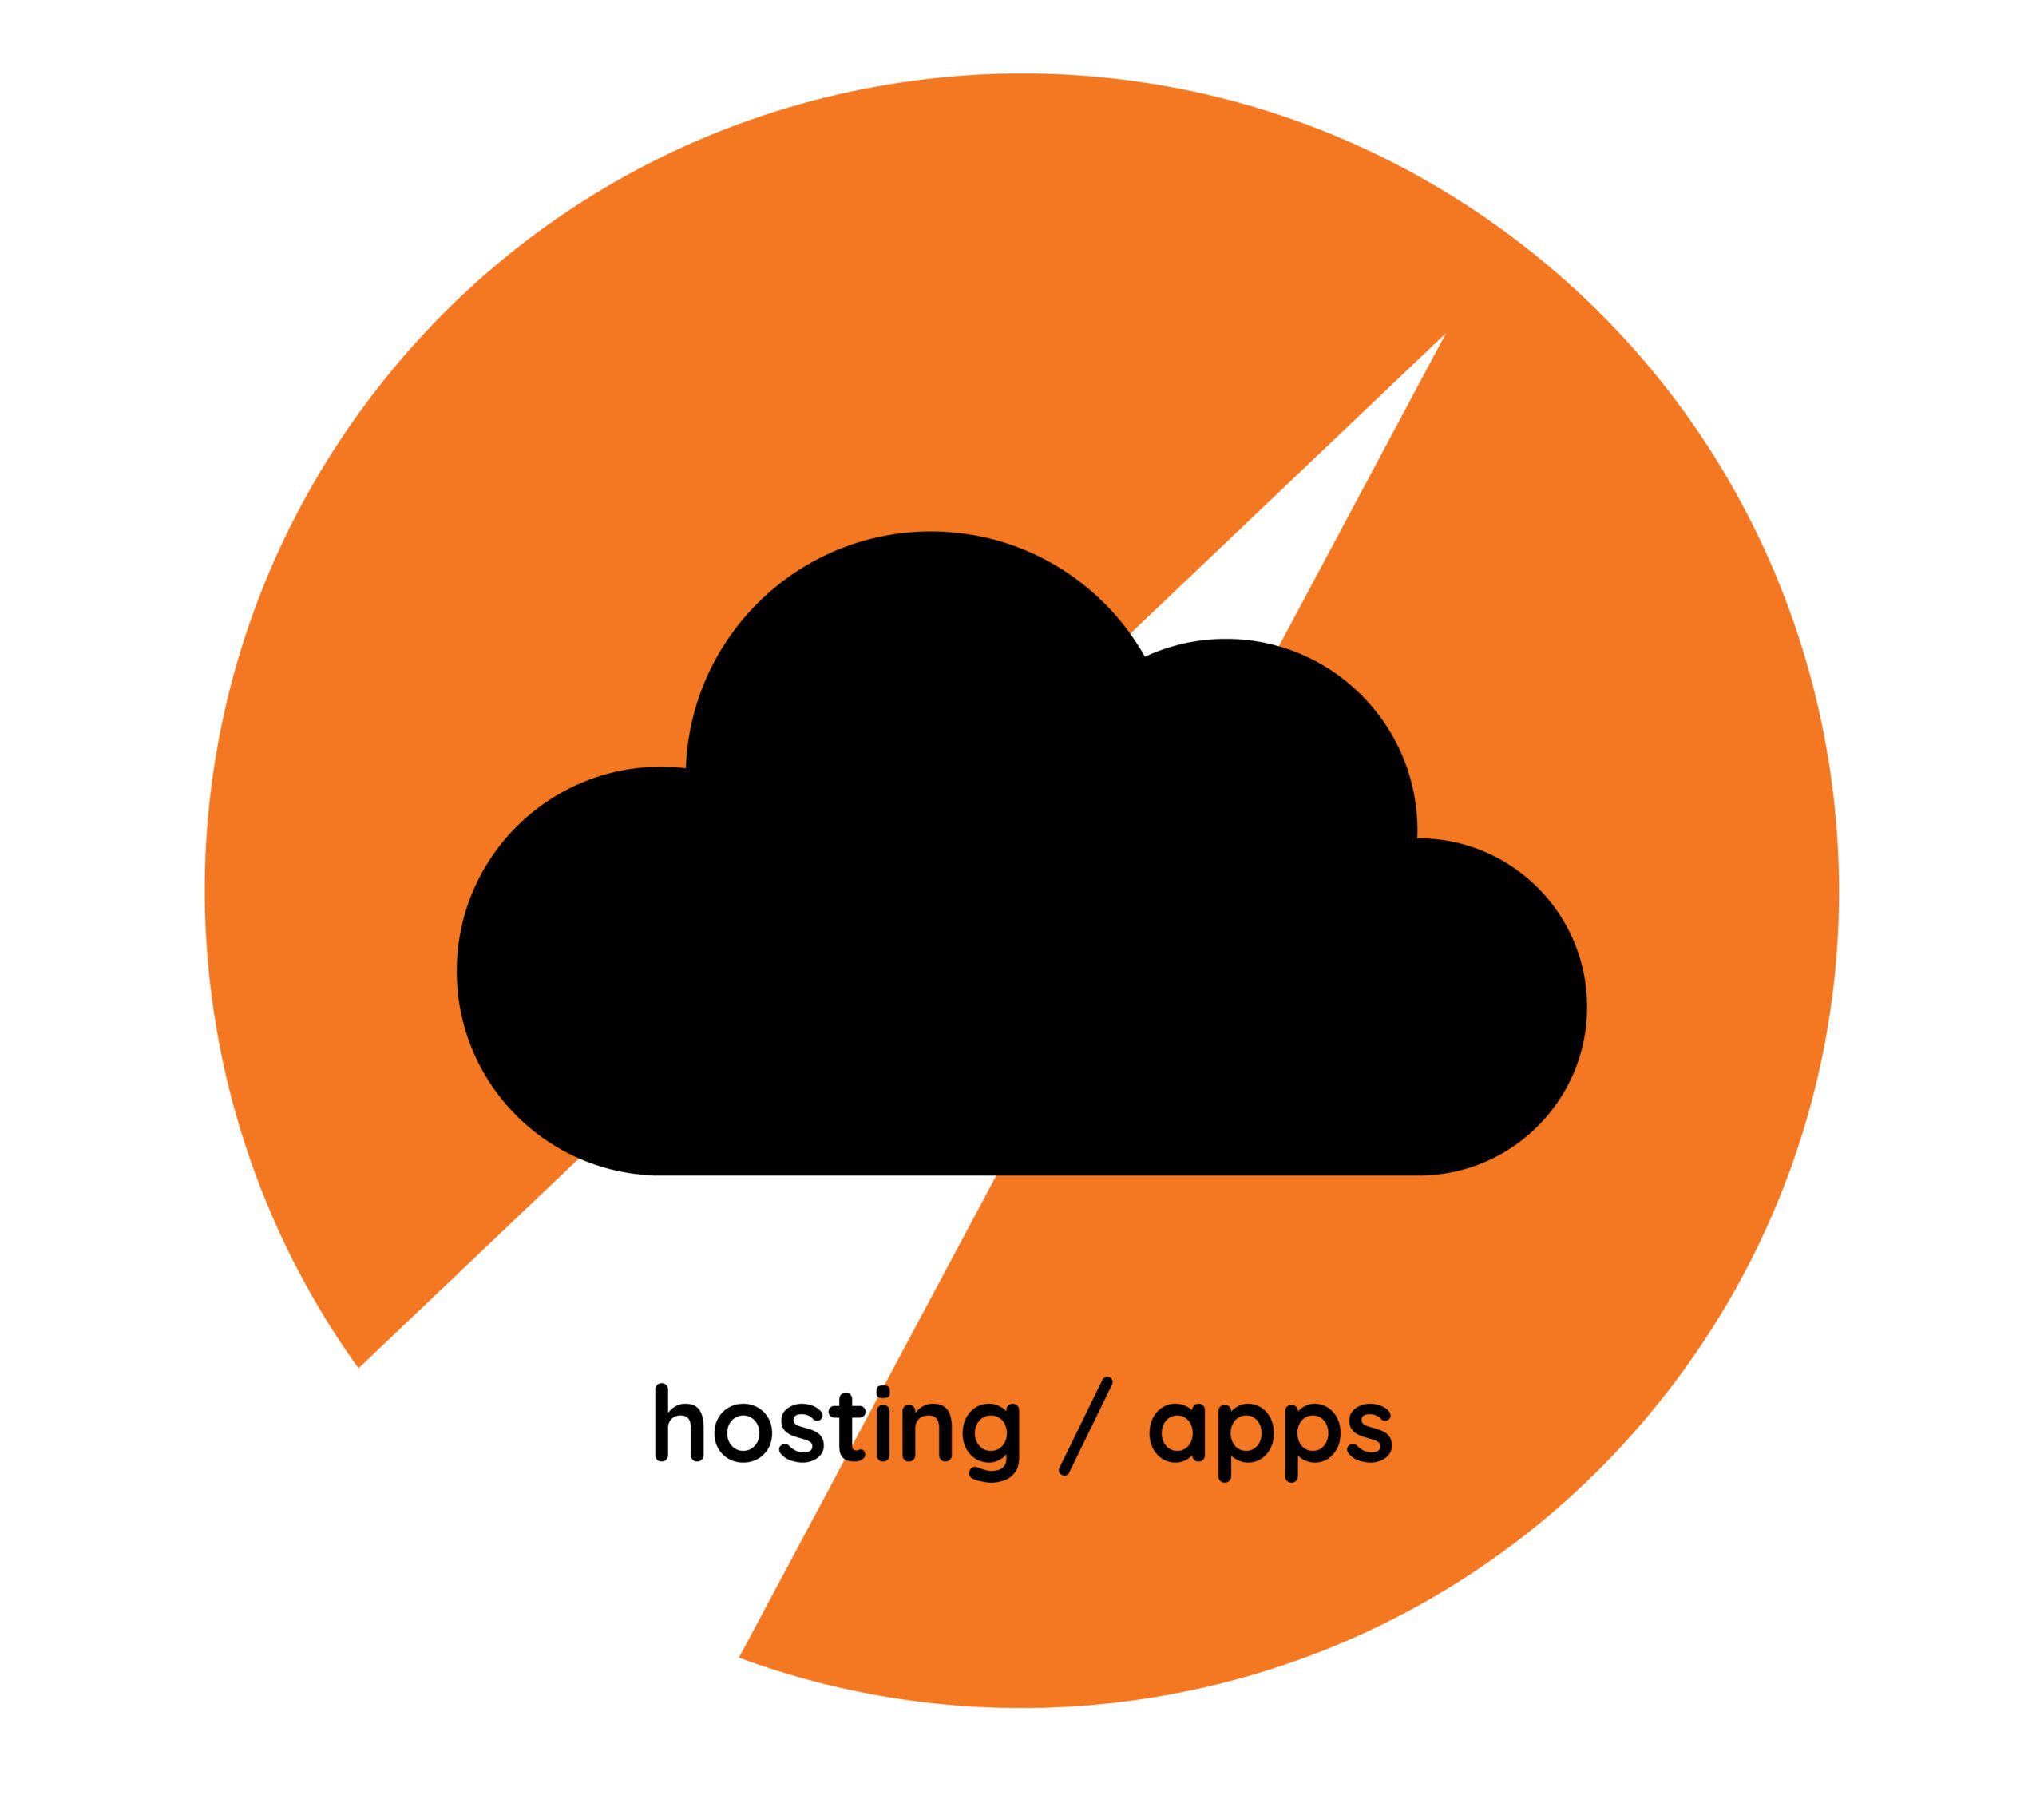 cloud hosting / apps